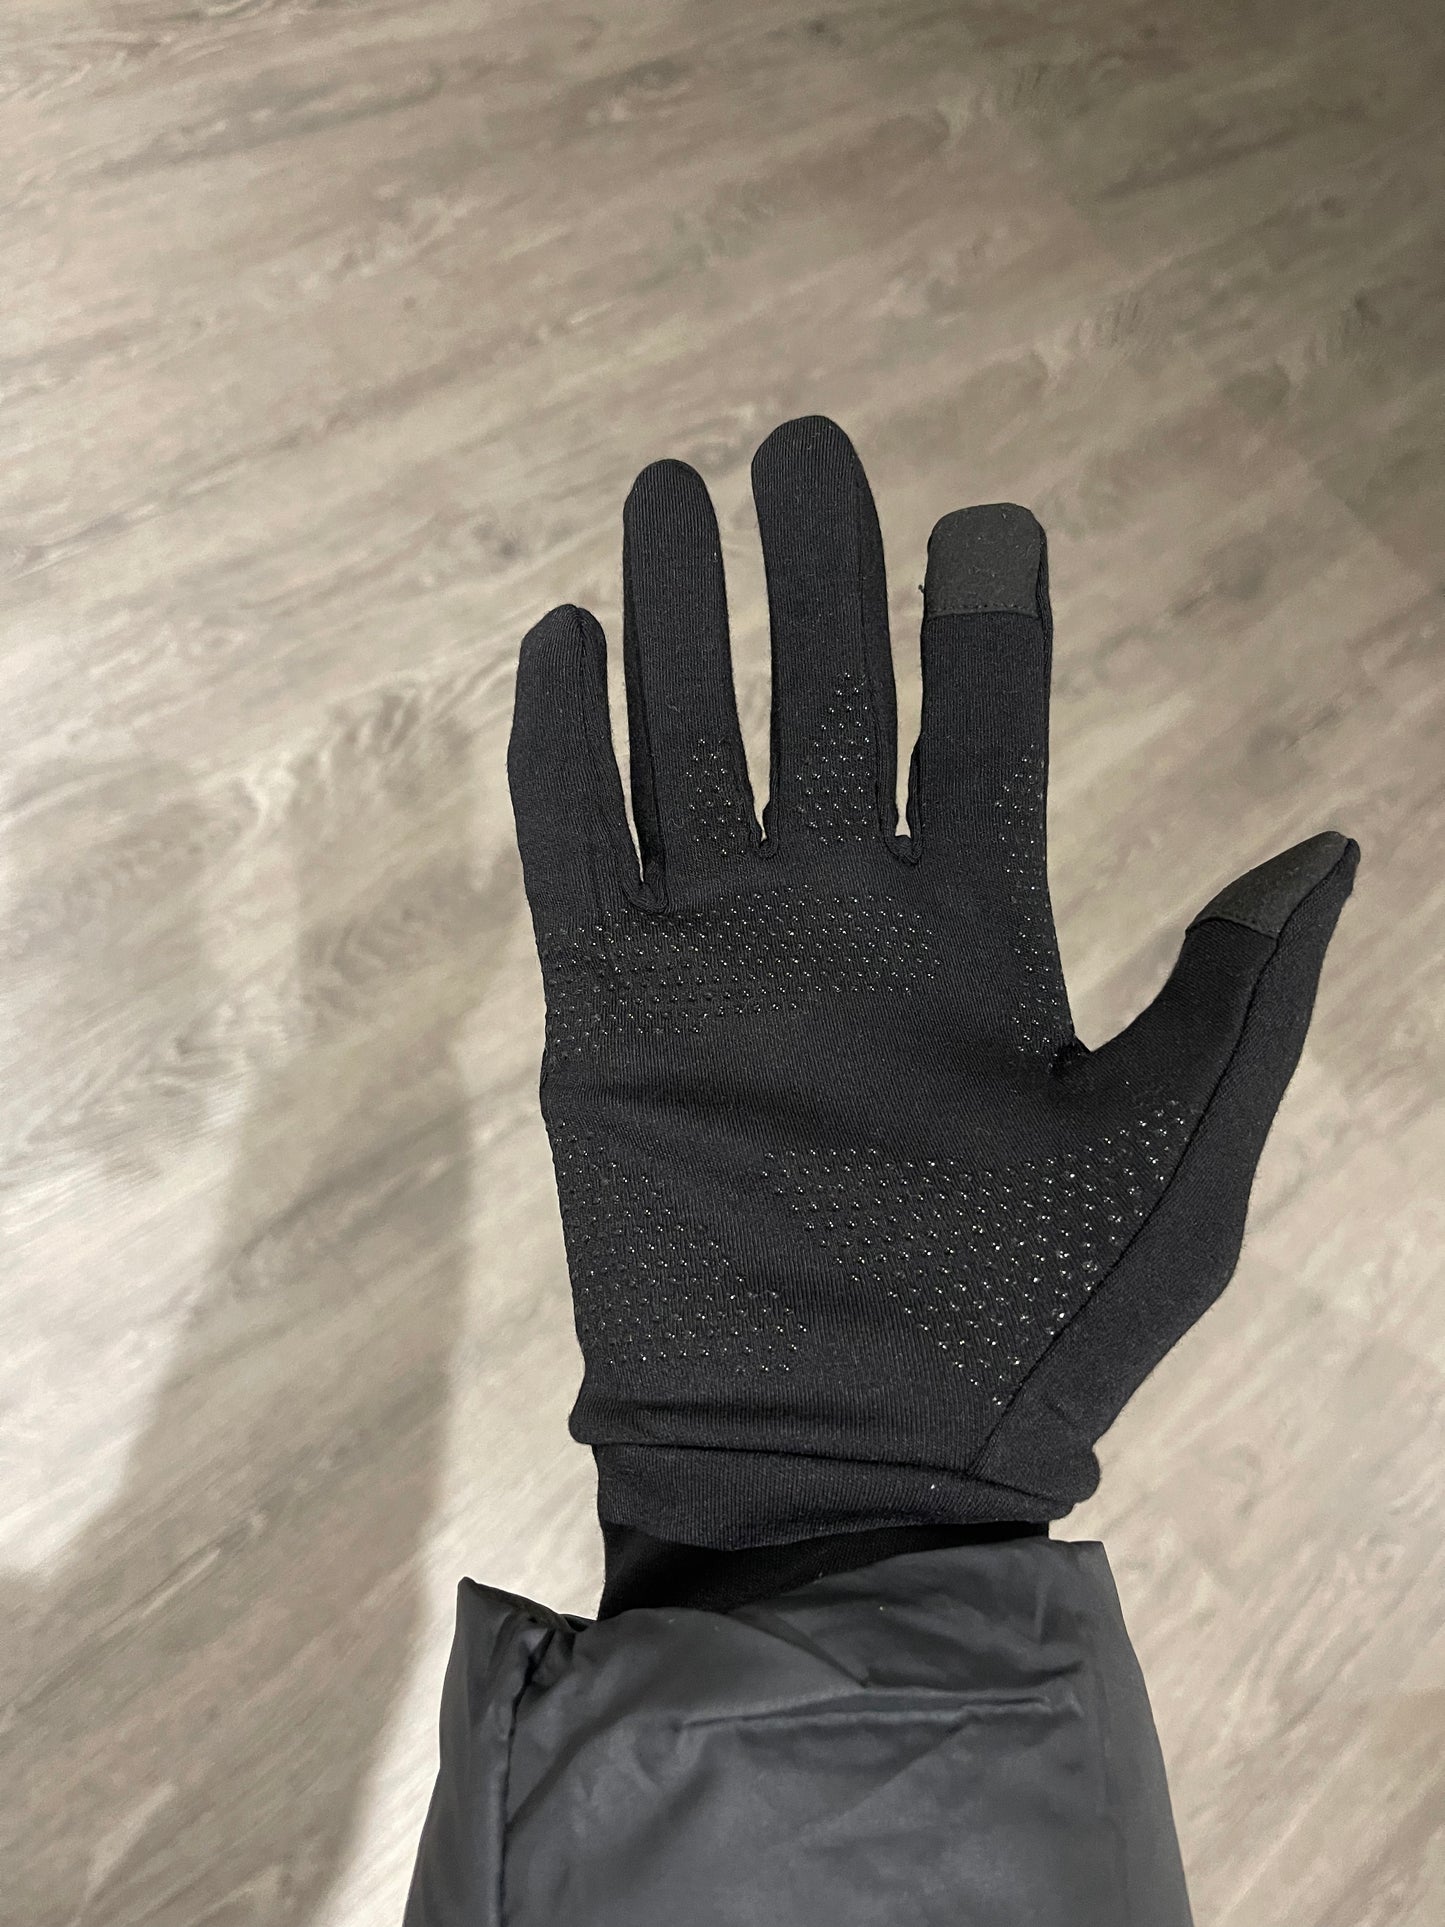 Igloo Gloves - Black